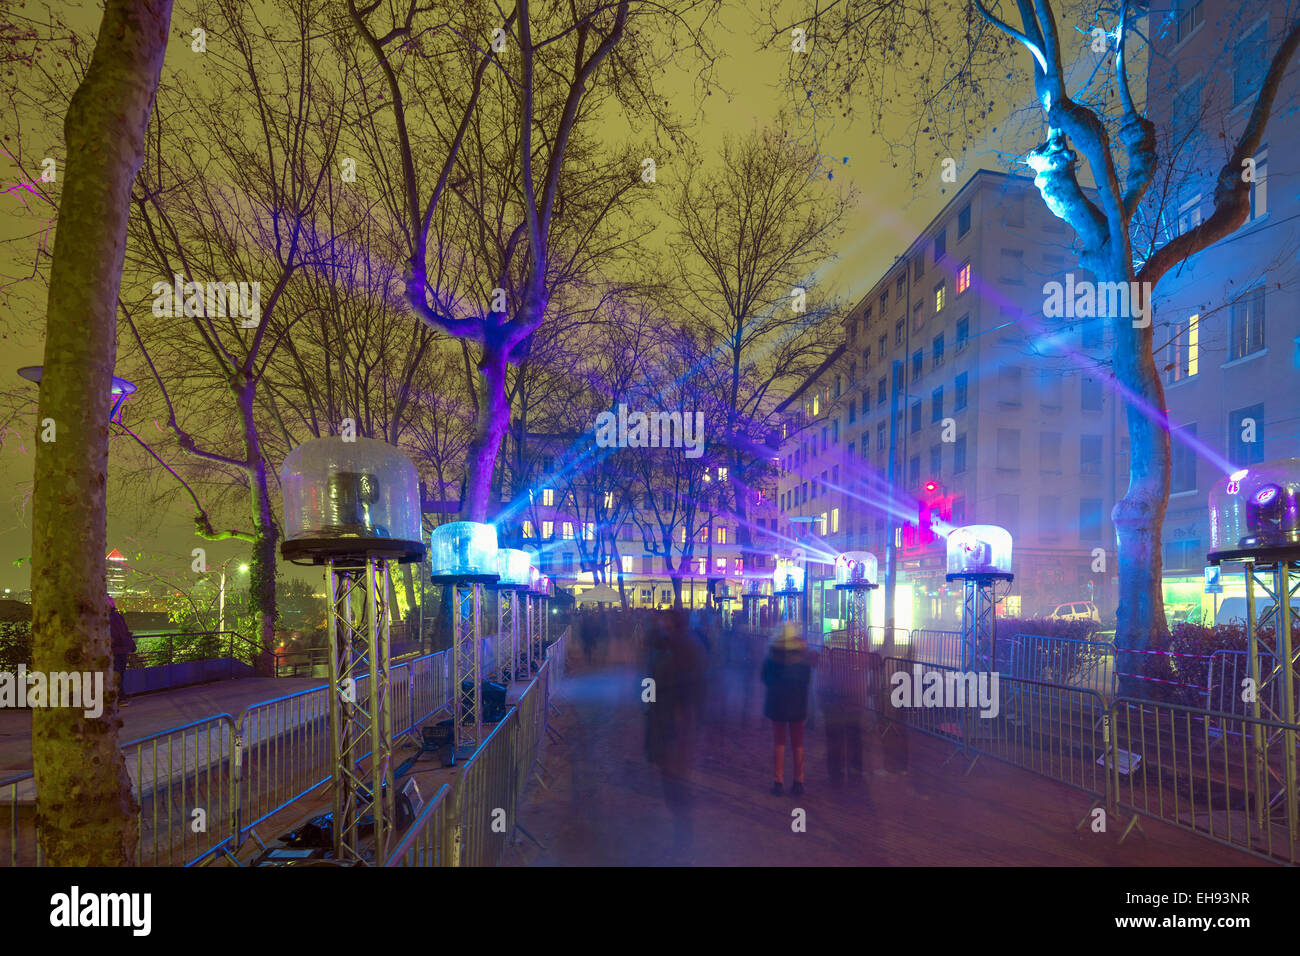 Europe, France, Rhone-Alpes, Lyon, Fete des Lumieres, festival of lights, illuminated park Stock Photo